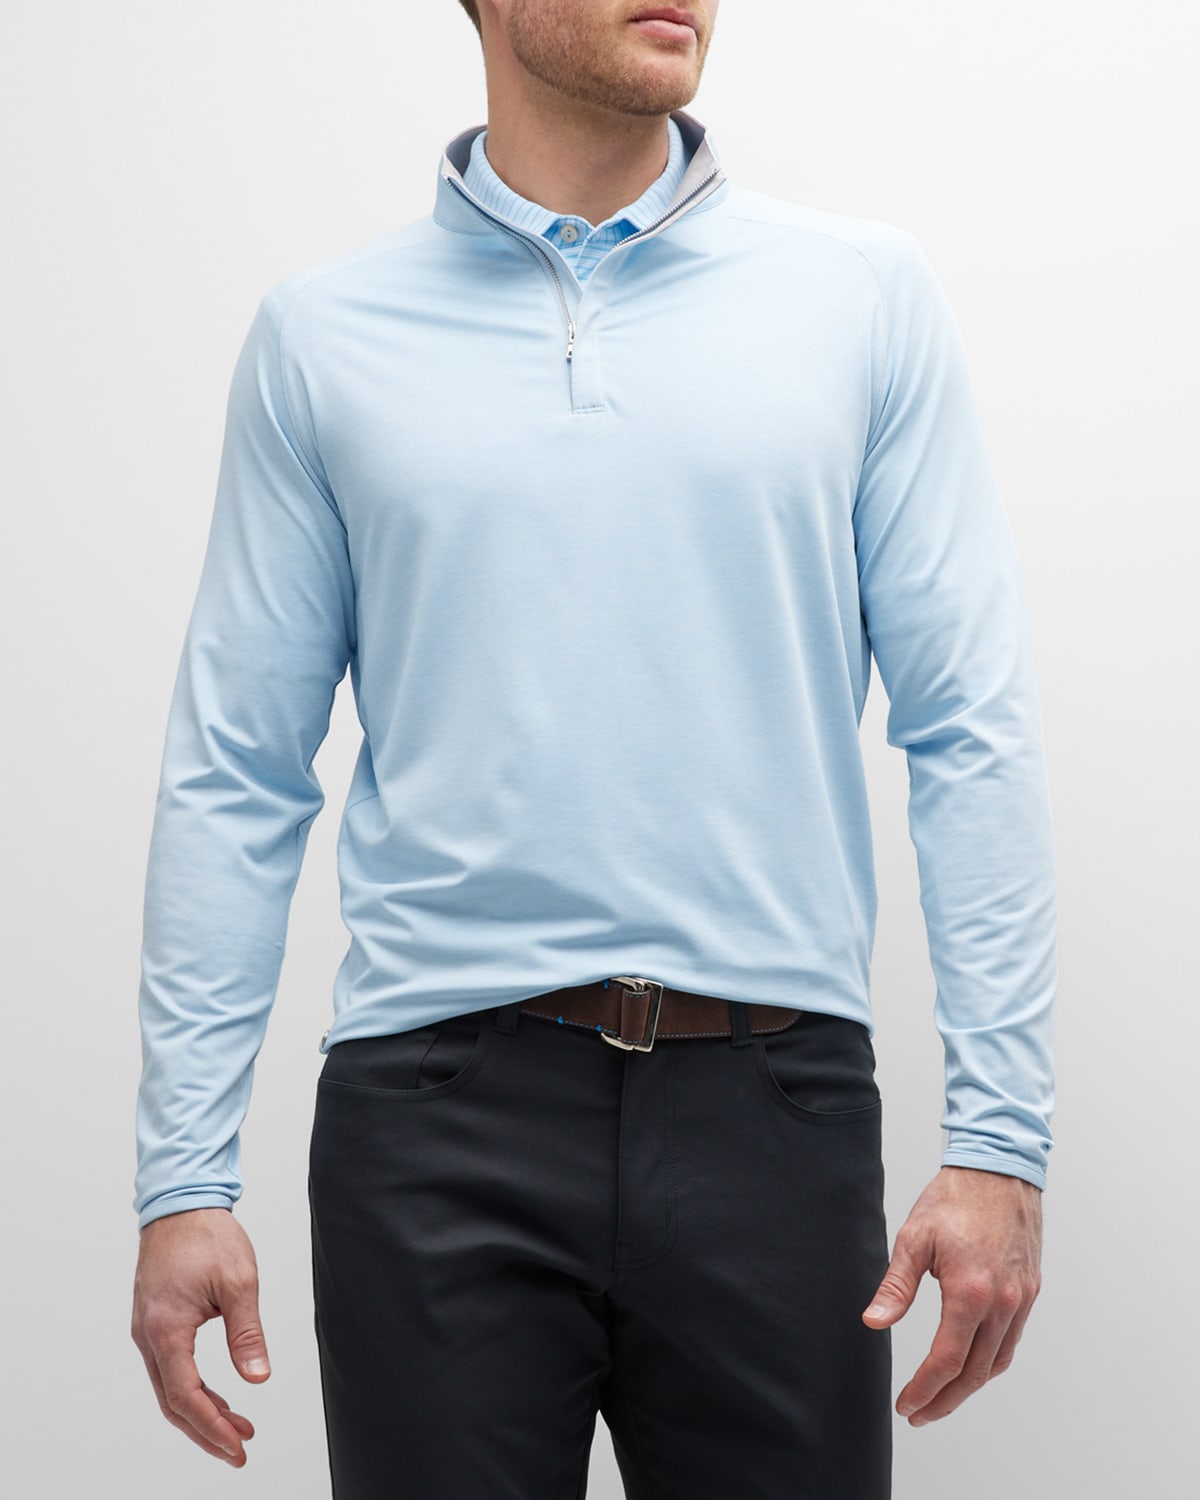 Men's Stealth Performance Stretch Quarter-Zip Sweater